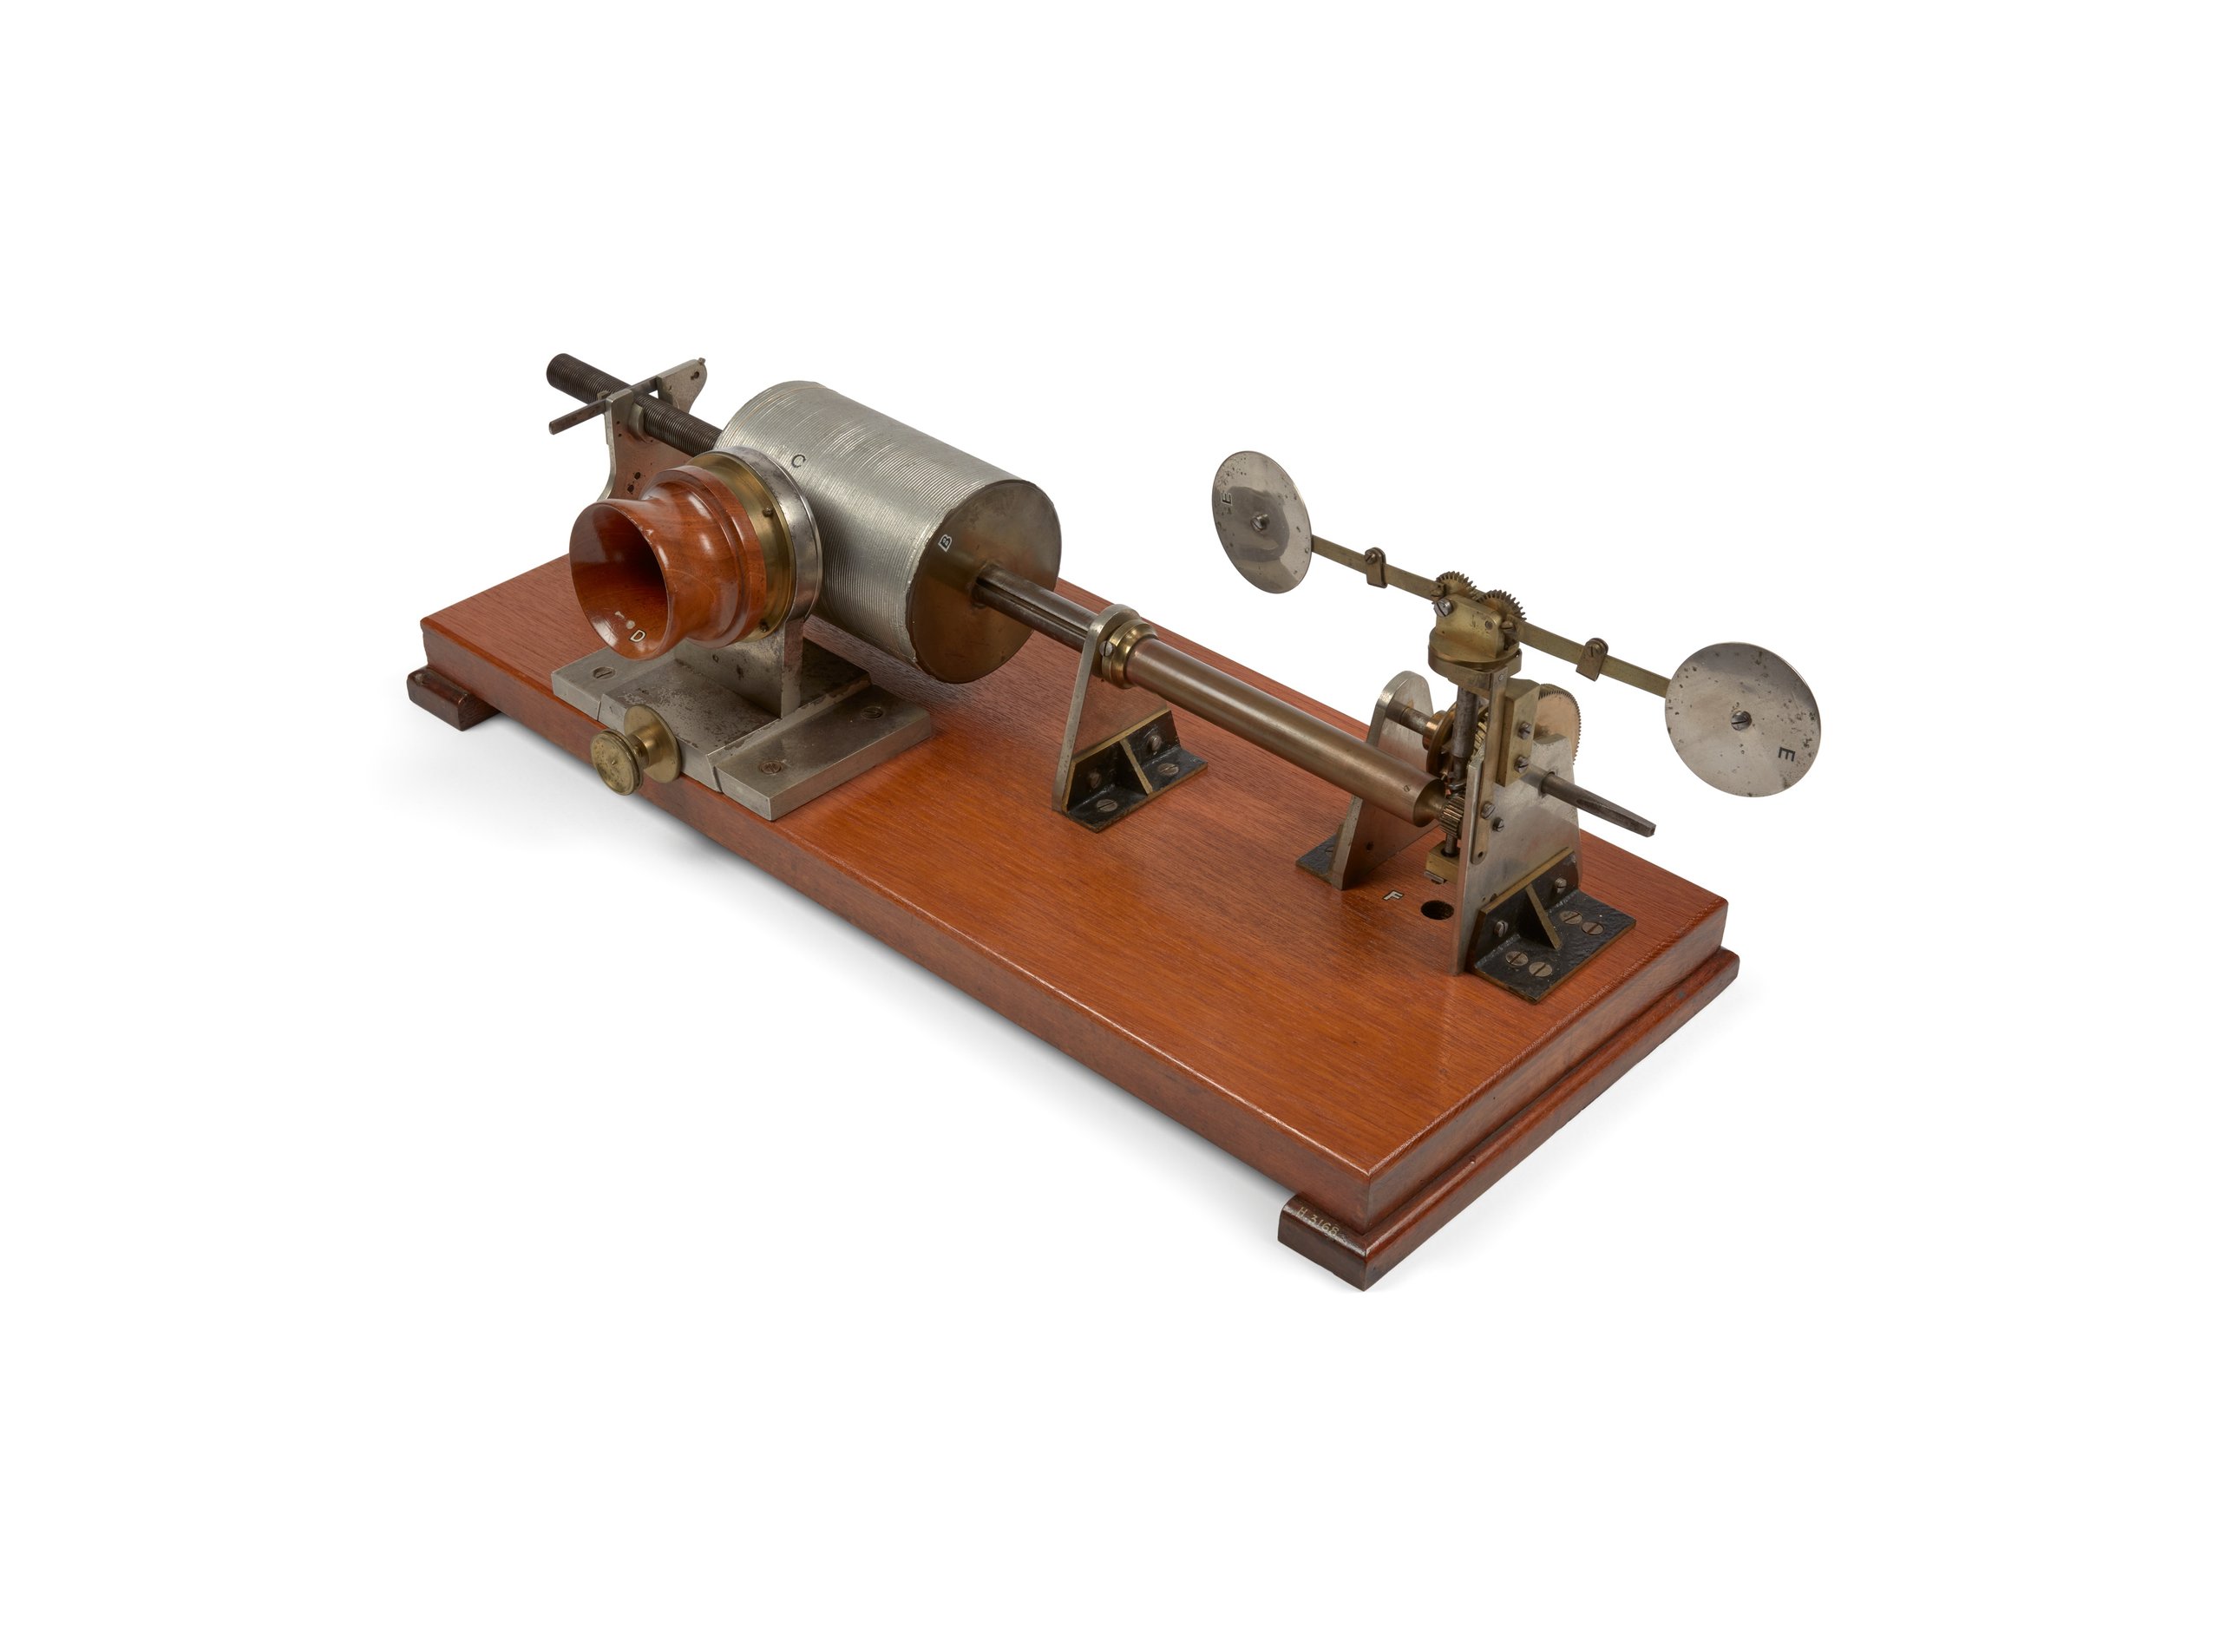 Edison tinfoil phonograph